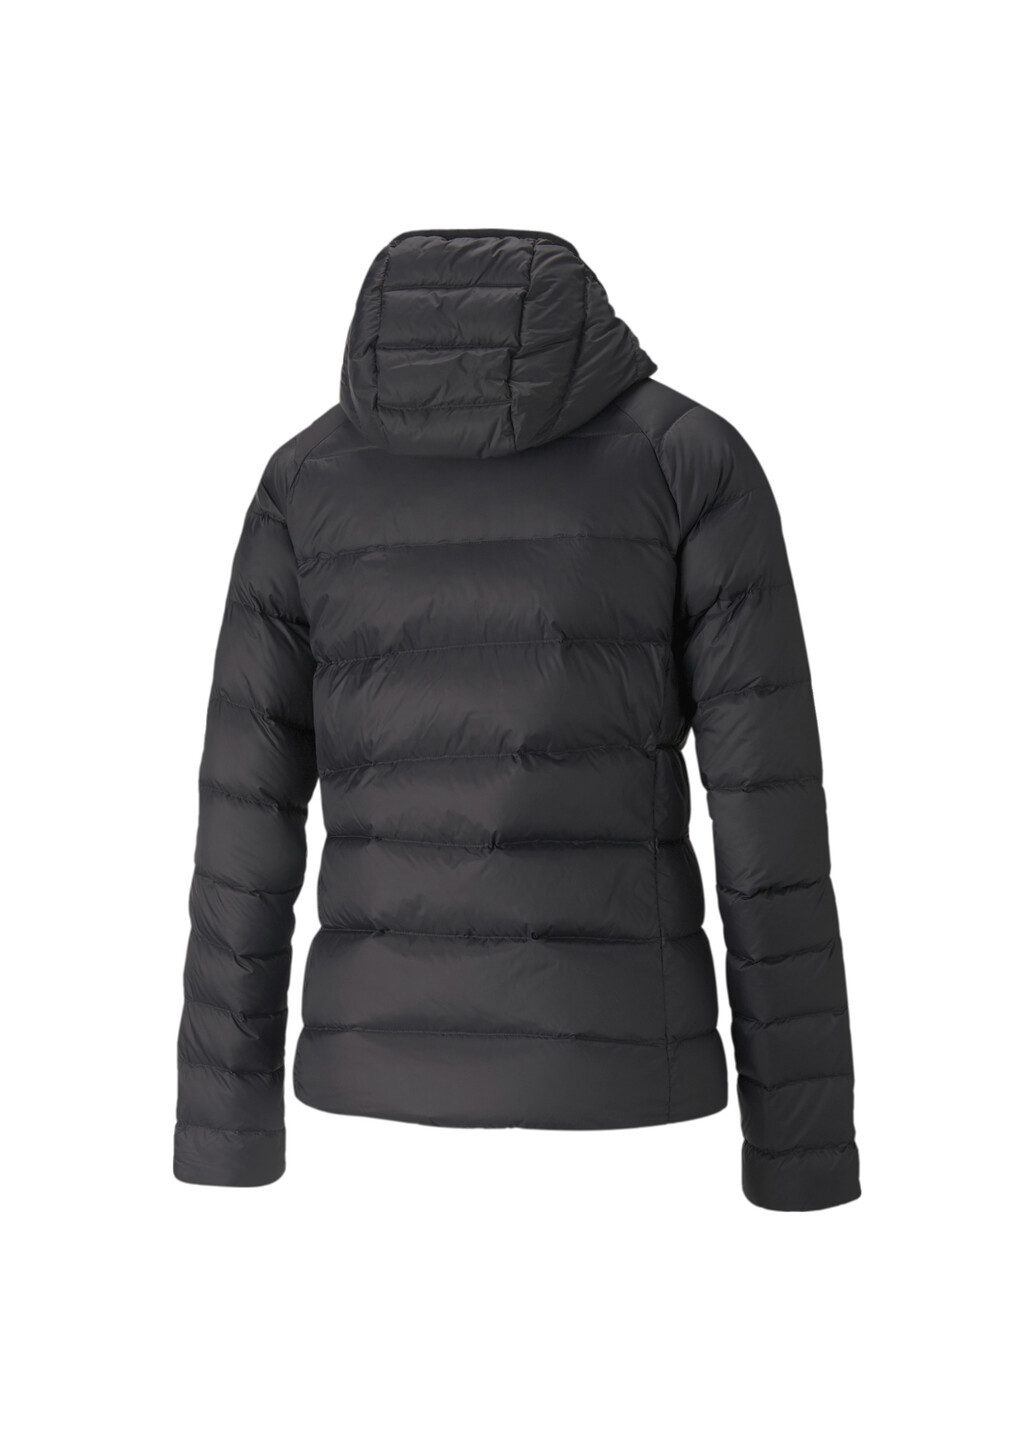 Черная демисезонная куртка pwrwarm packlite women’s down jacket Puma